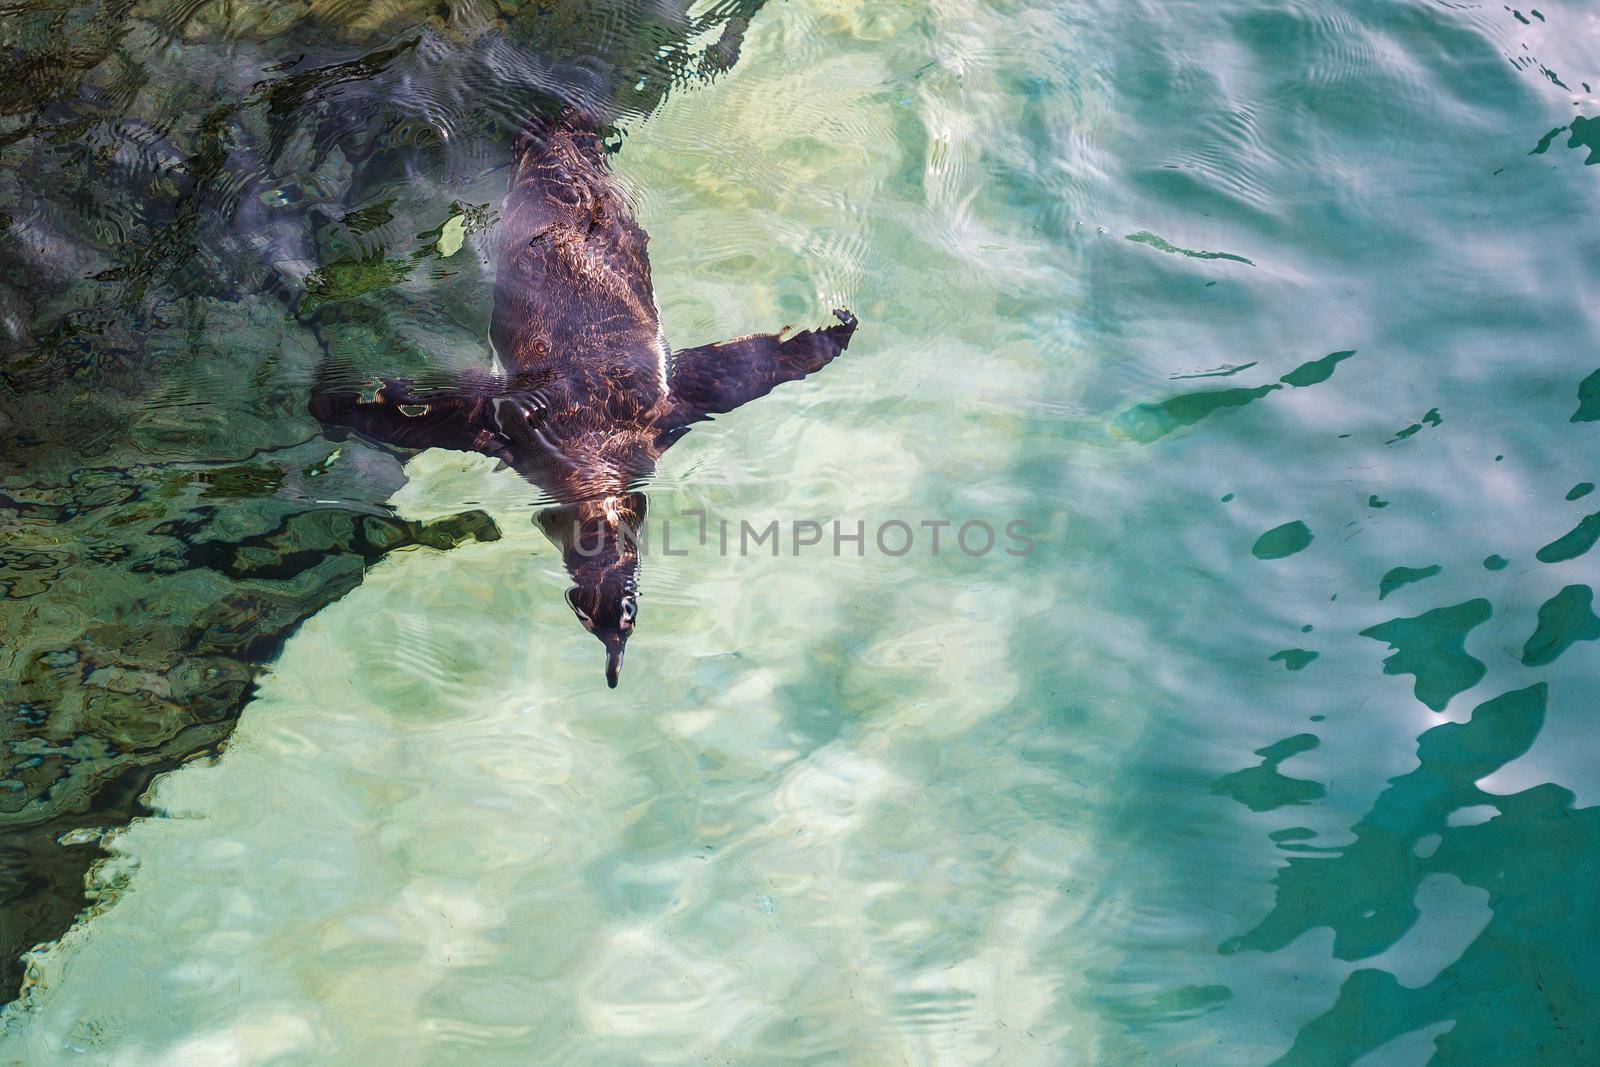 Penguin dive. Humboldt penguin close-up is swimming in water underwater photo, in green tones by Lincikas